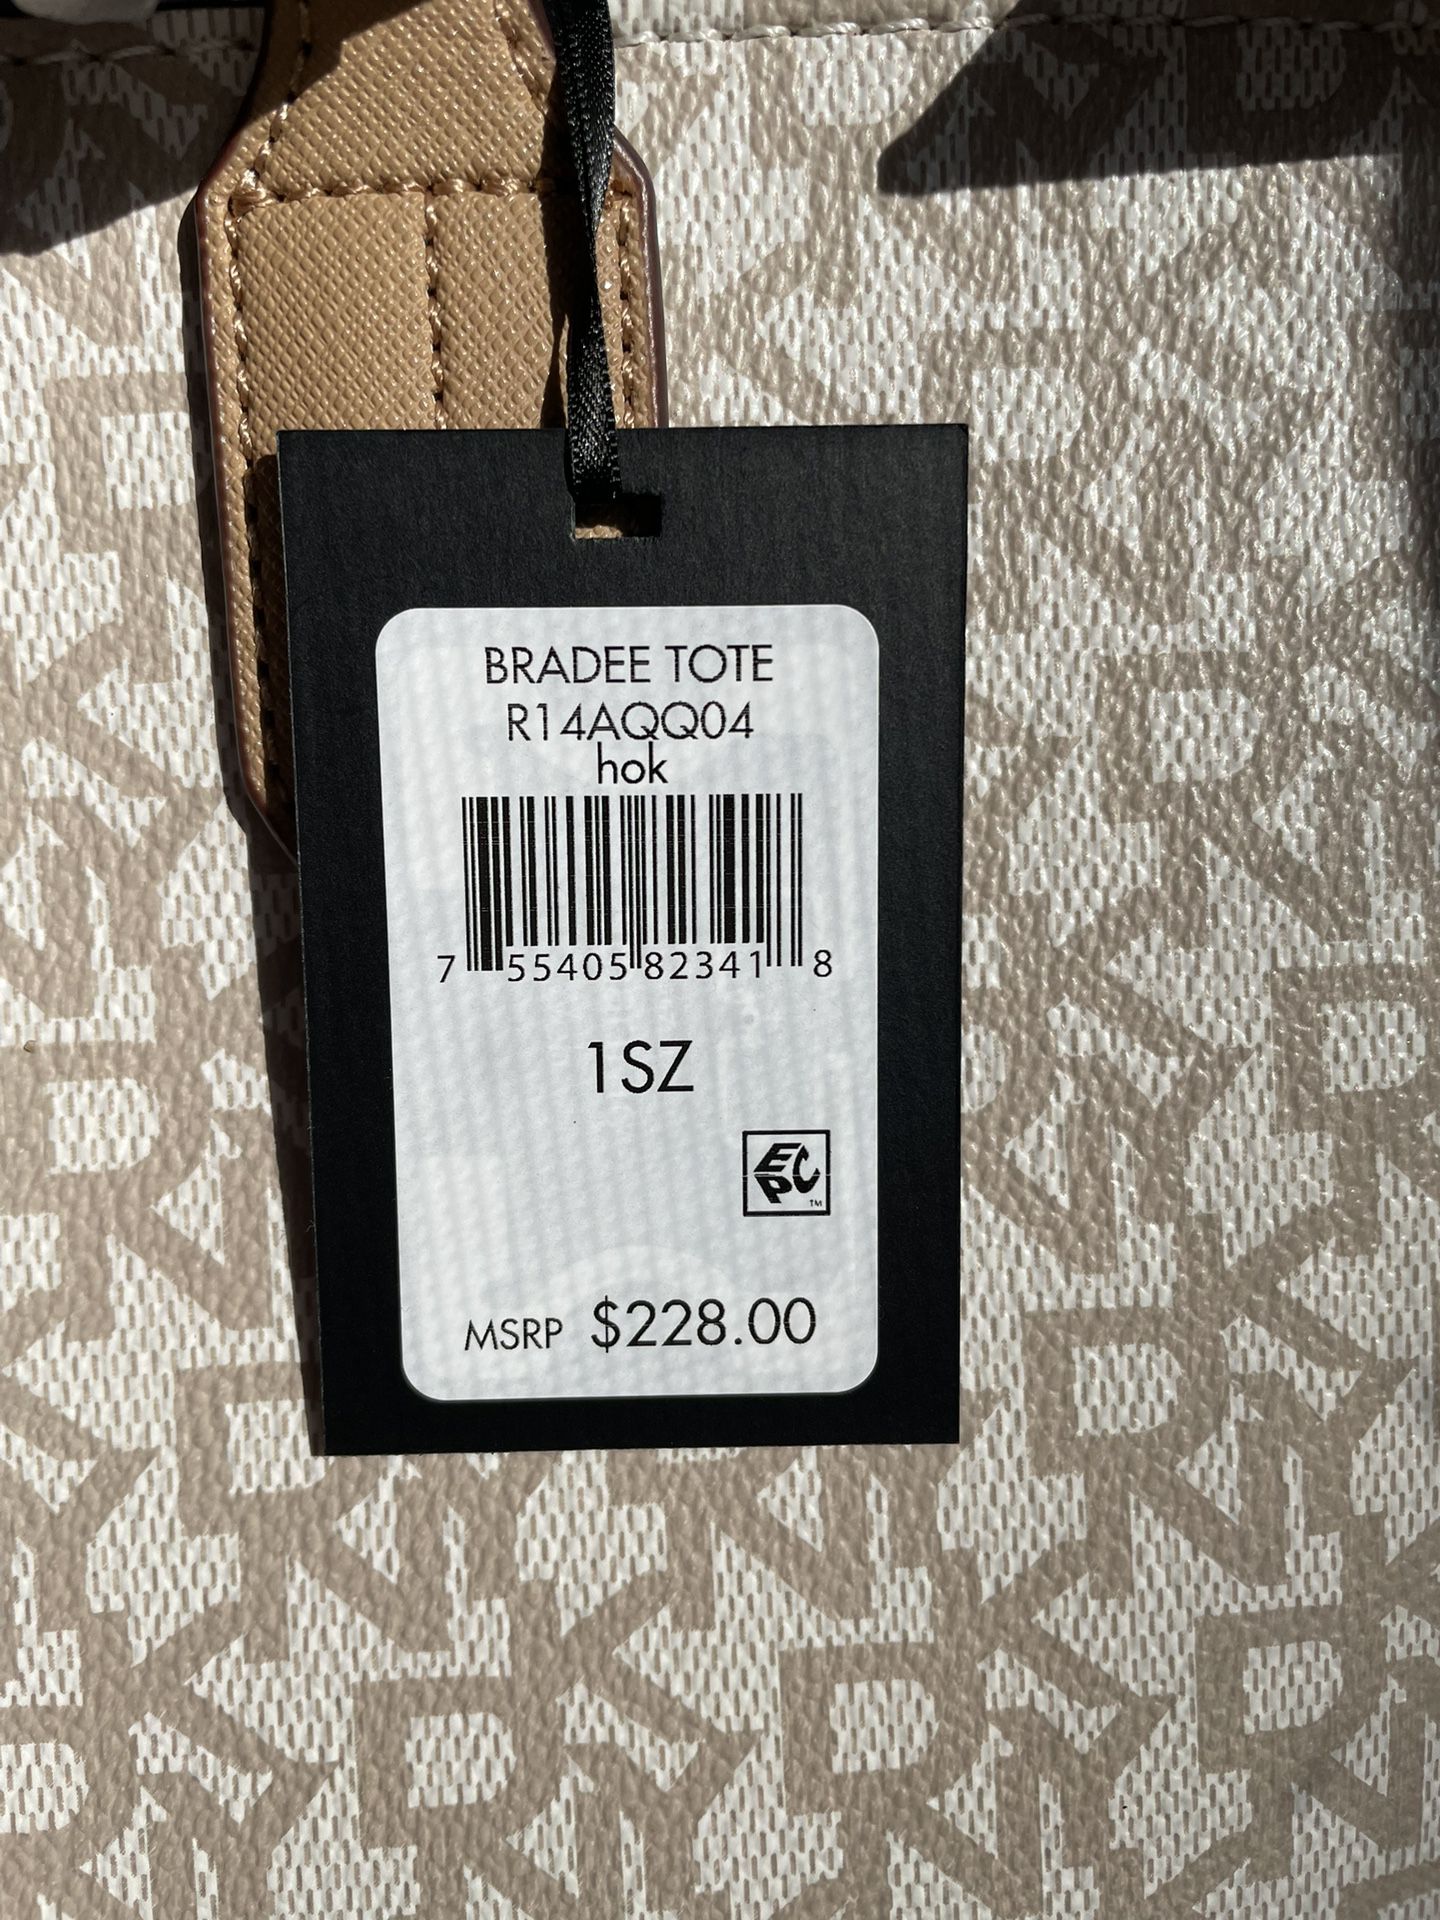 DKNY BRADEE Monogram Tote Bag w/Credit Card Holder Brown Logo PVC $228 